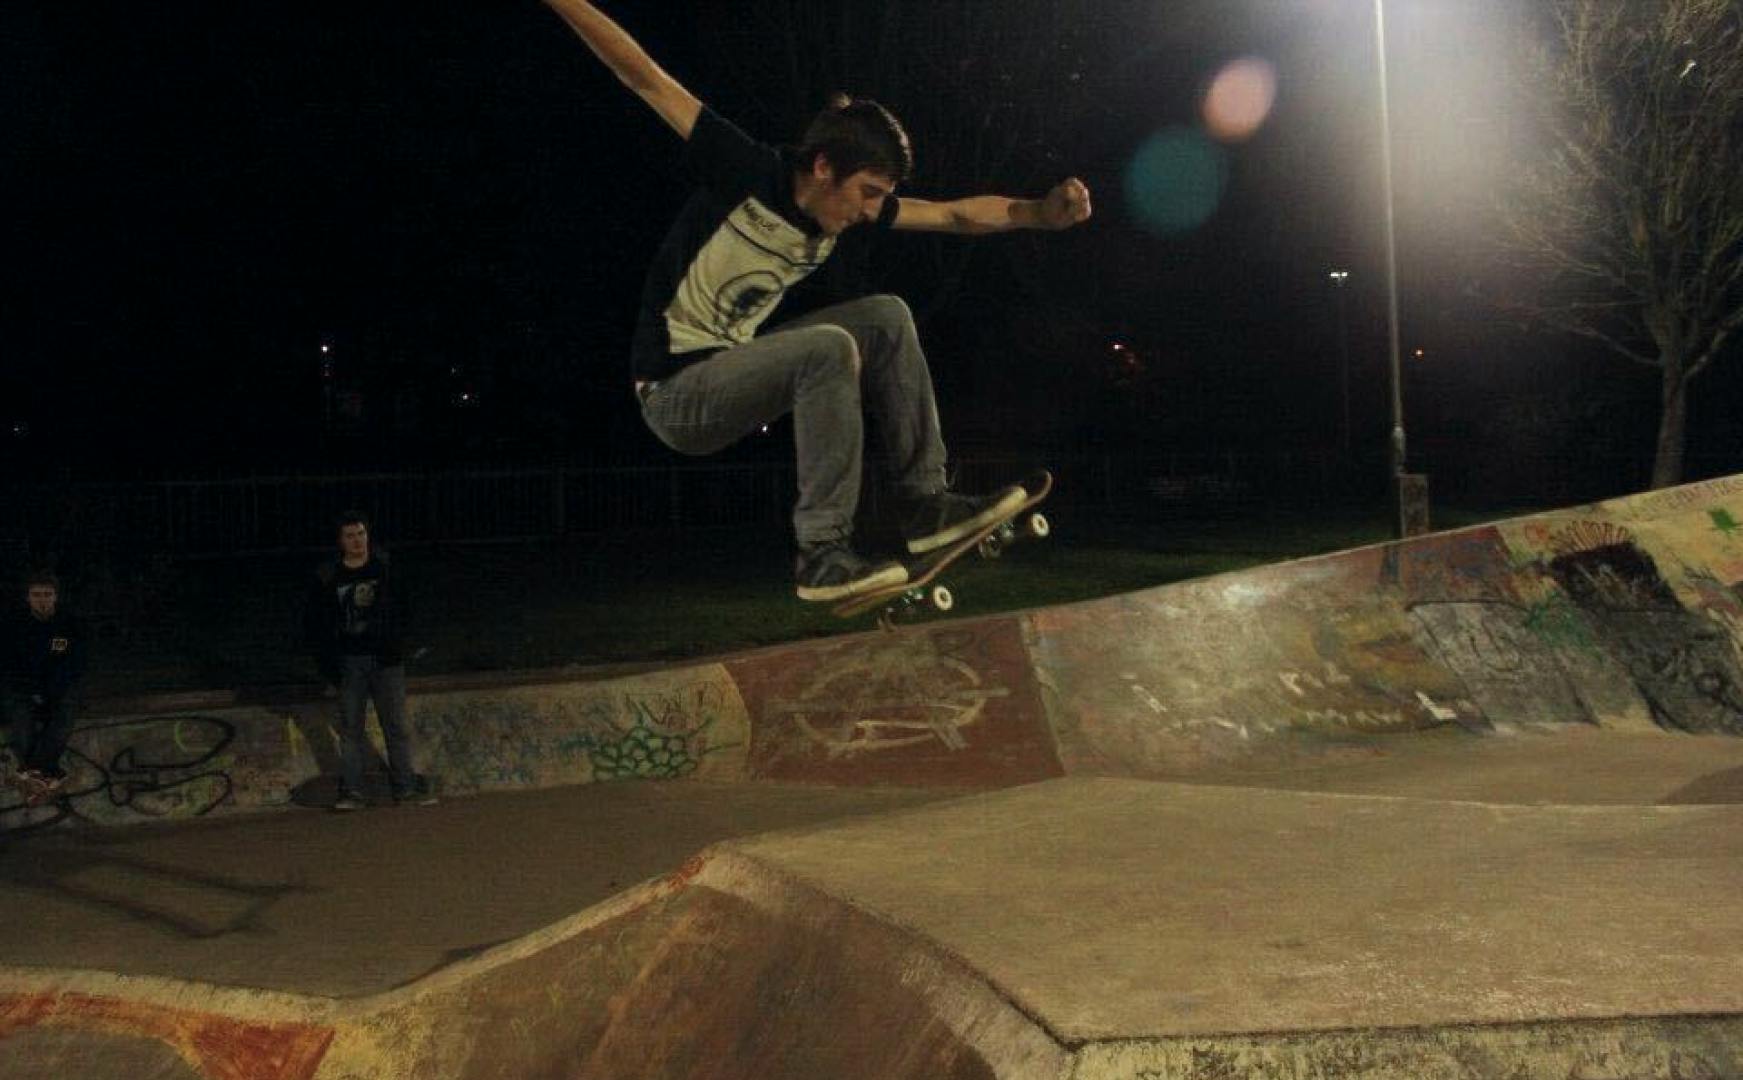 David doing a skateboarding trick at a skate park